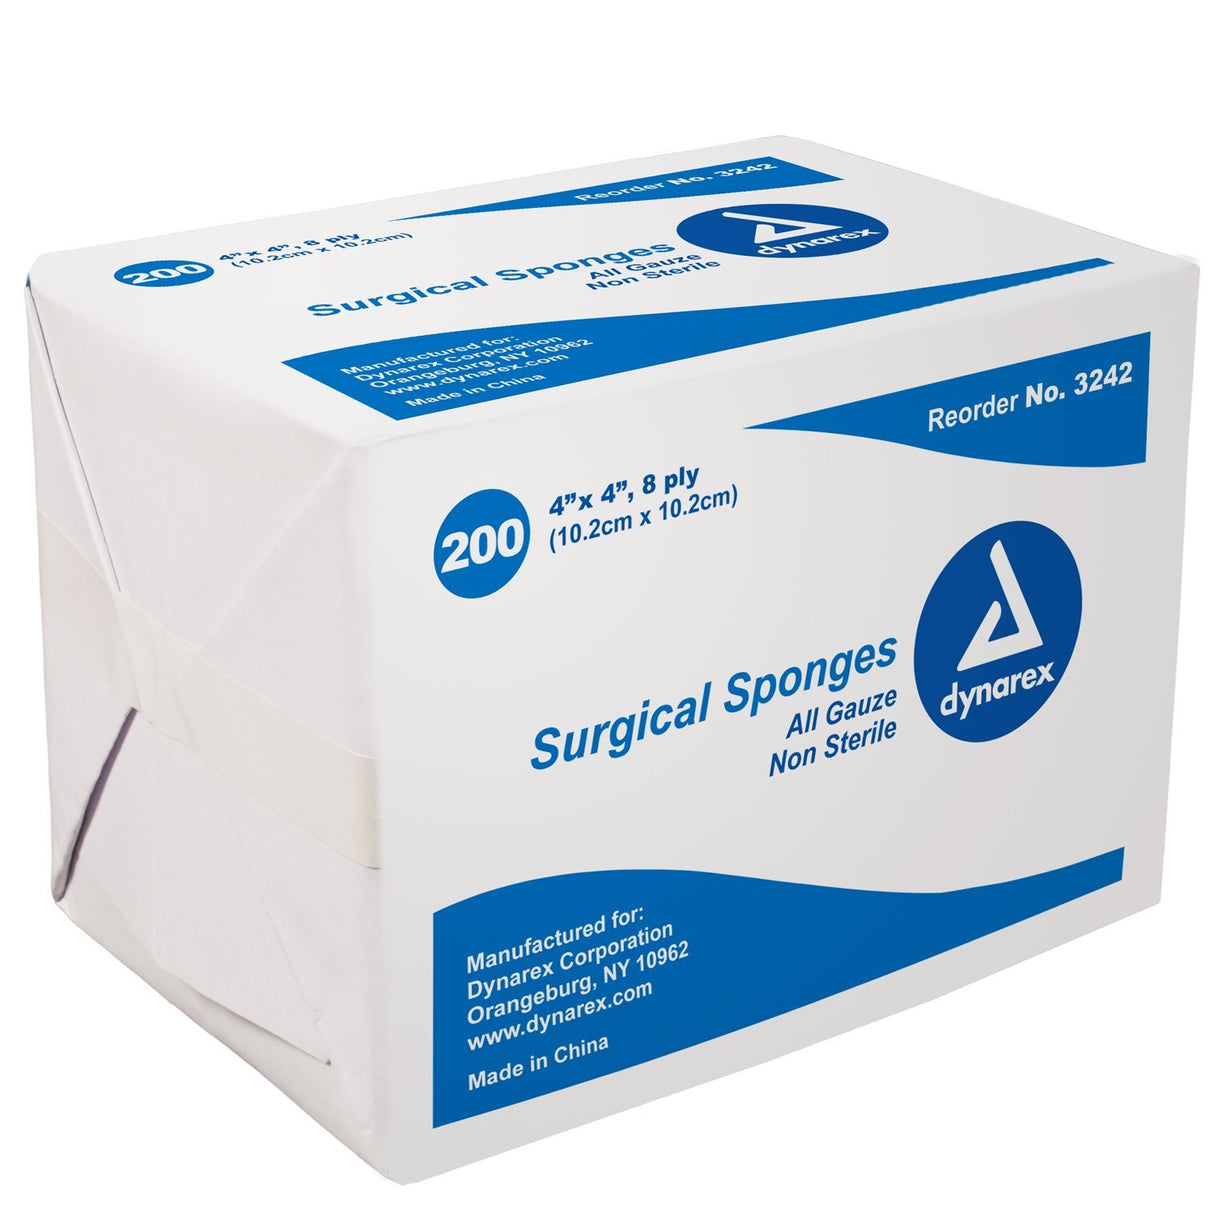 Image of Surgical Gauze Sponge - 4"x 4" 8 Ply